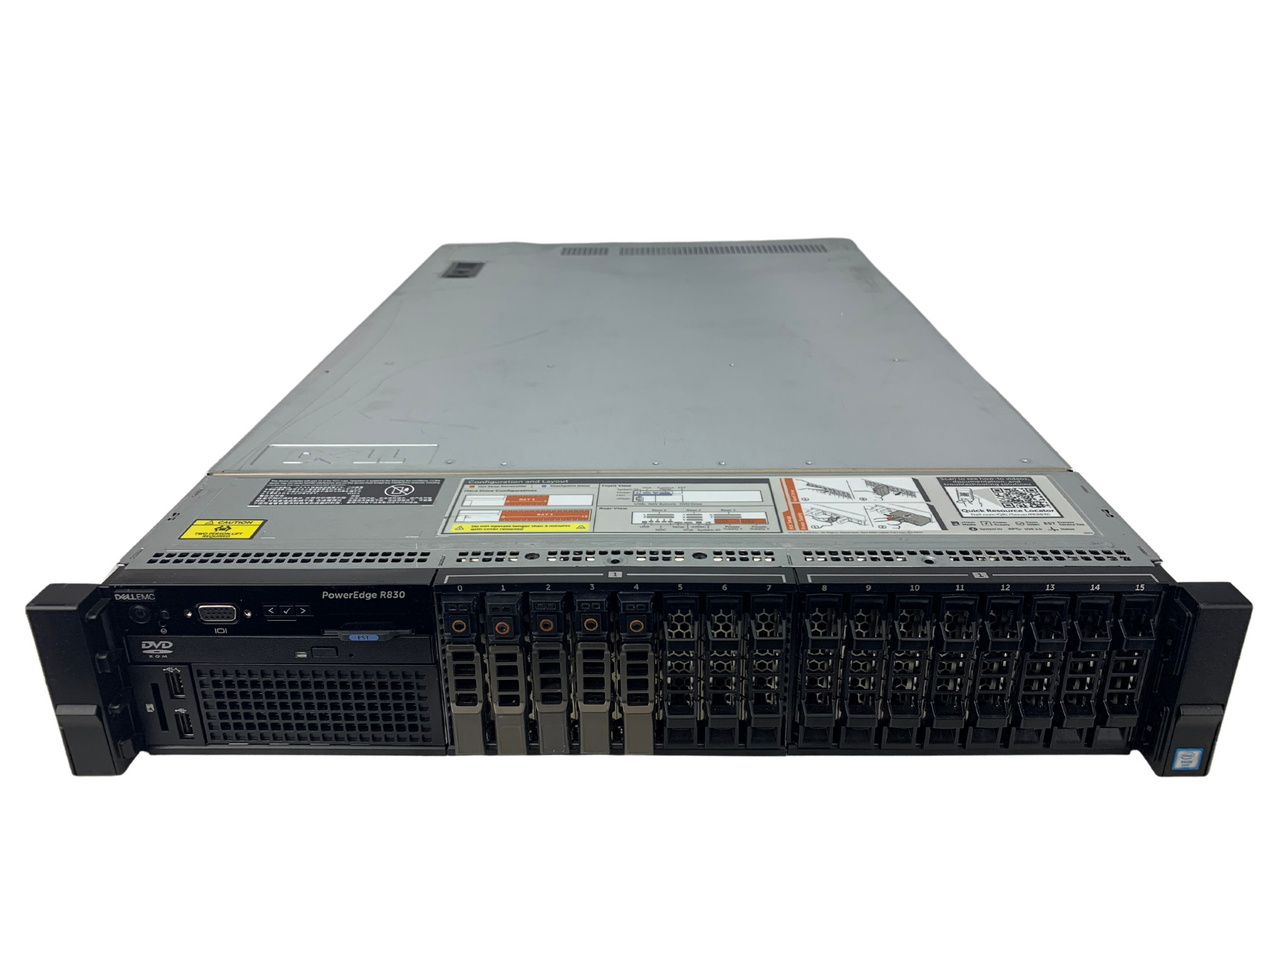 Refurbished Dell Poweredge R830 16 Bay Server